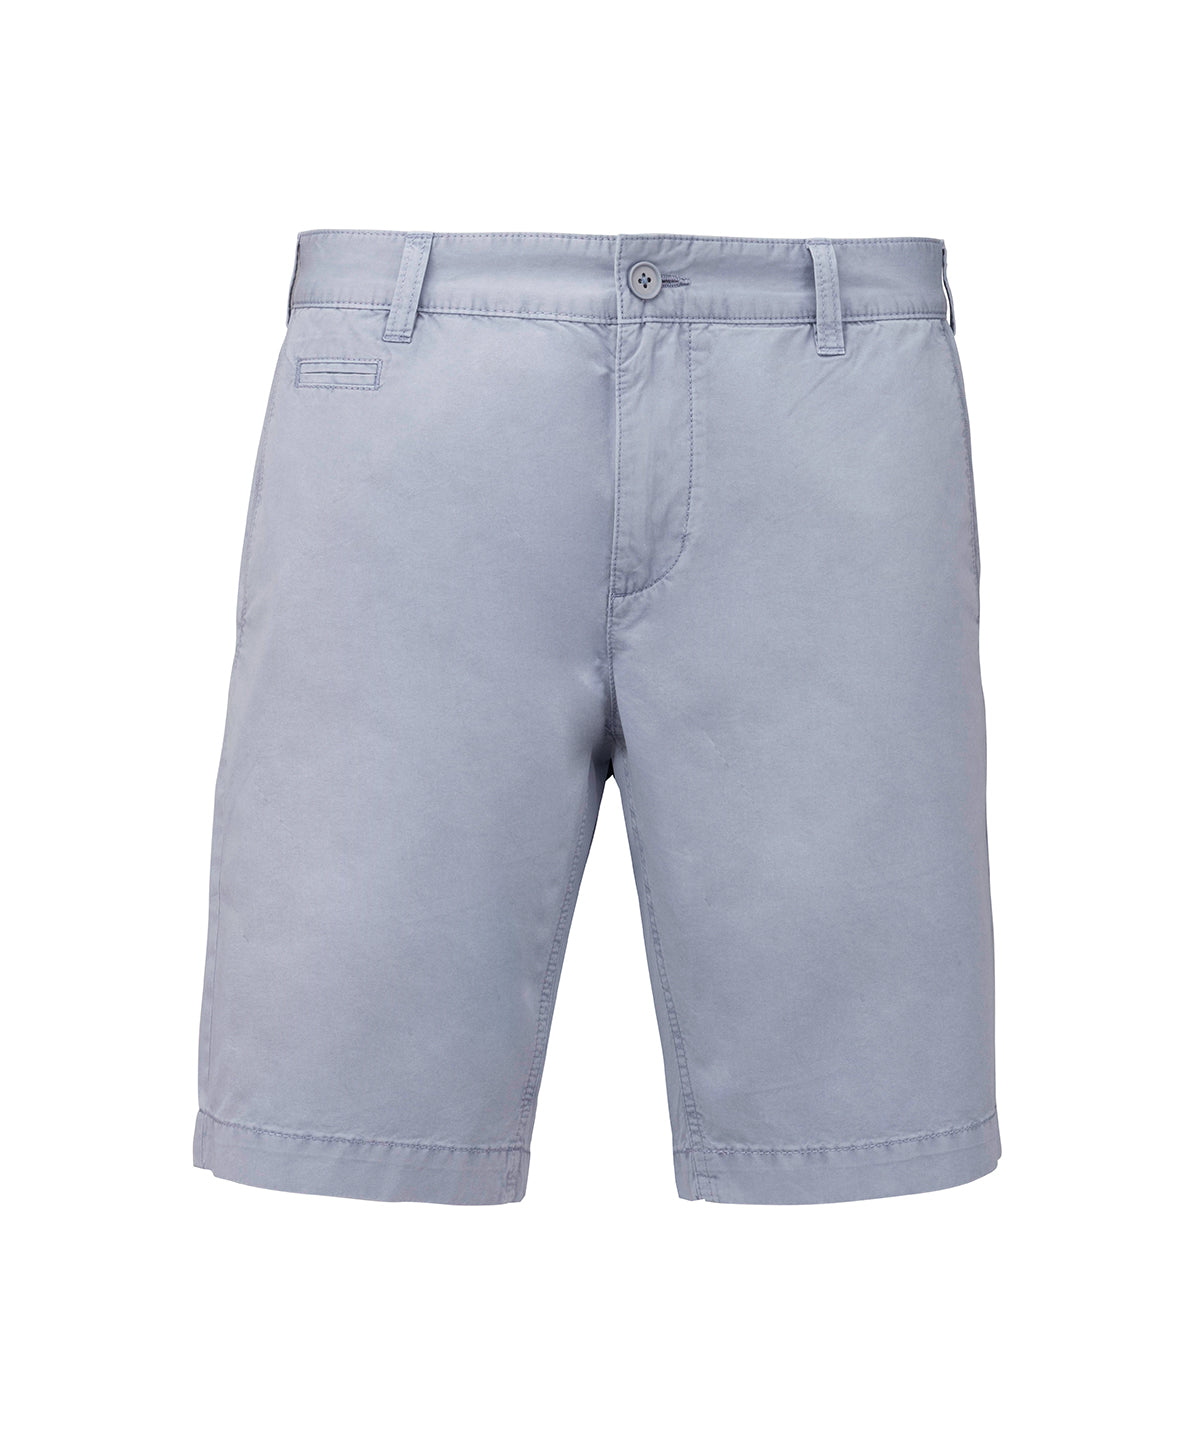 Stuttbuxur - Men's Washed Effect Bermuda Shorts